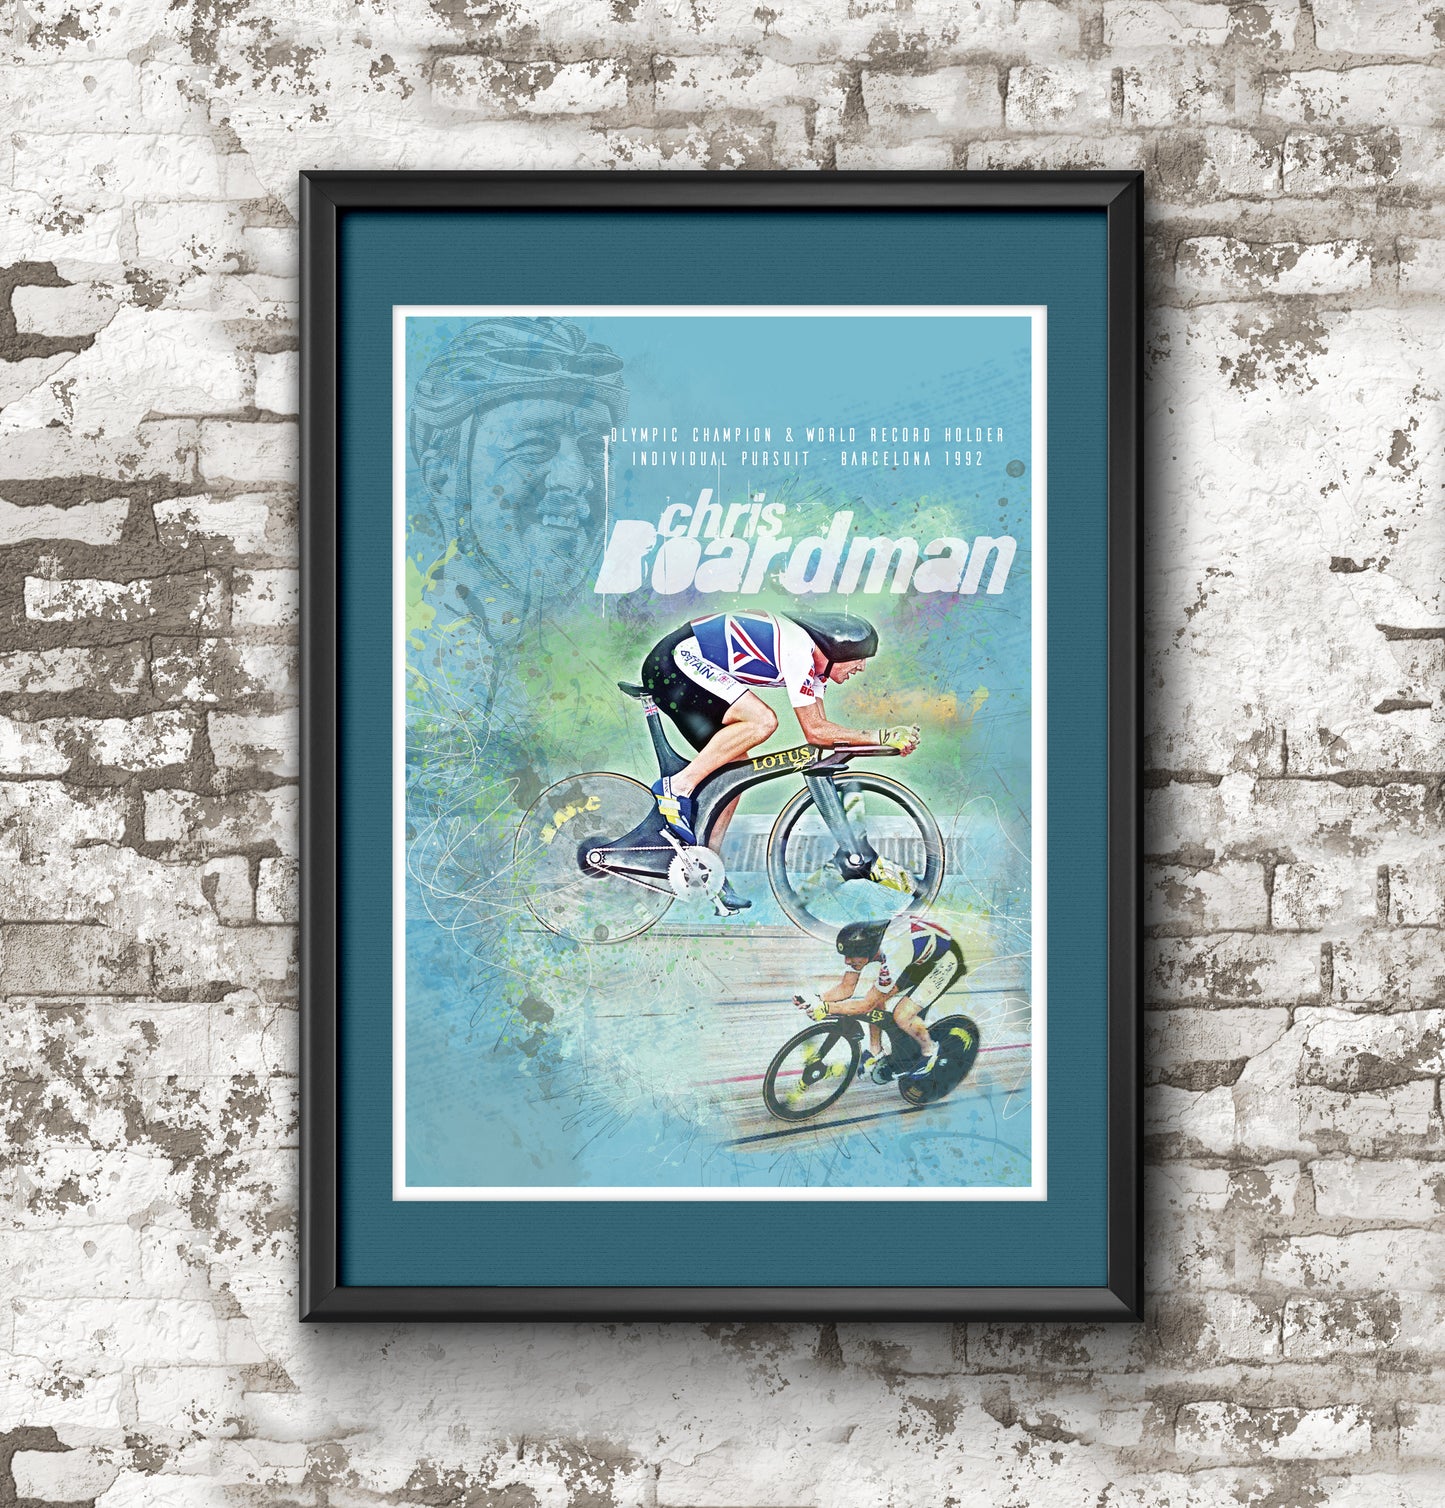 Chris Boardman - Cycling Art Print